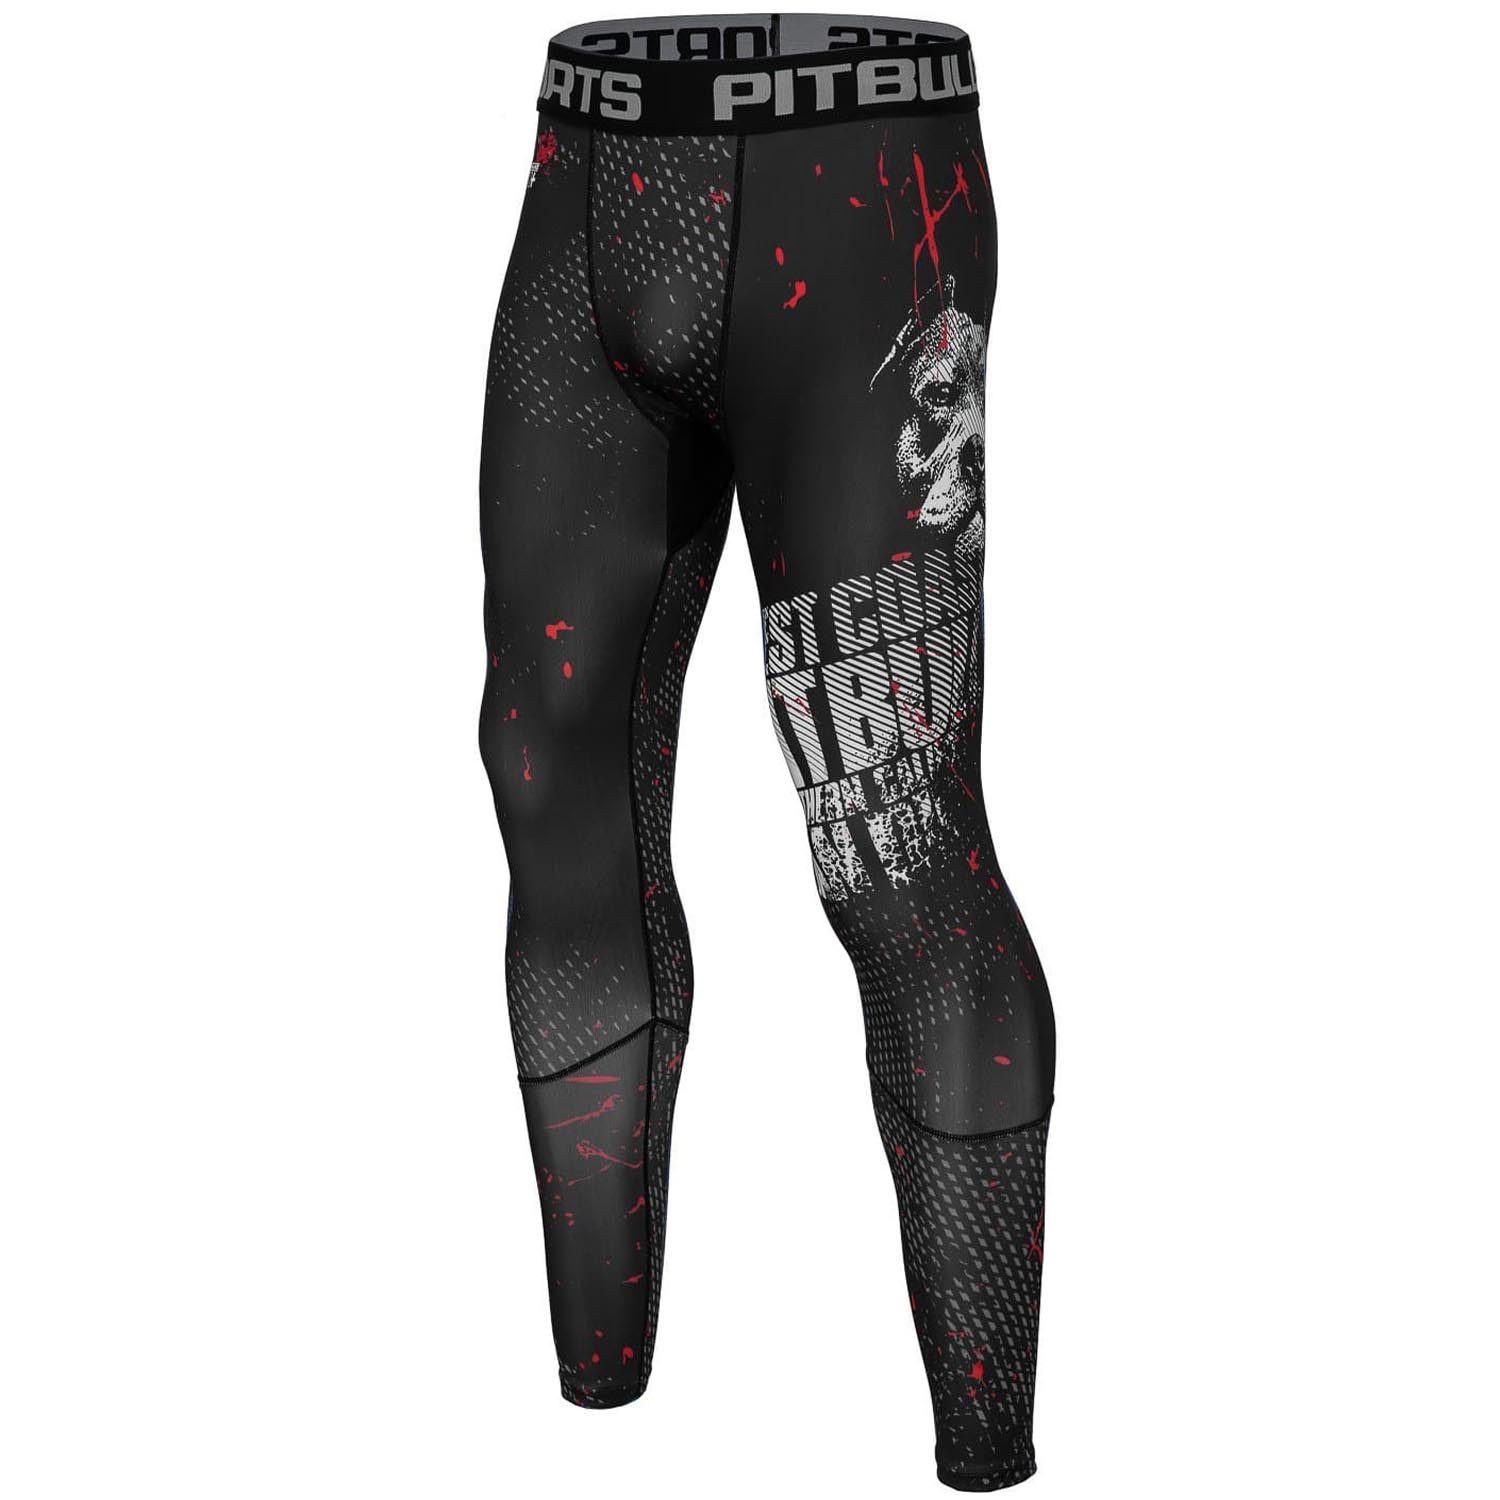 Pit Bull West Coast Compression Pants, Blood Dog Pro, schwarz